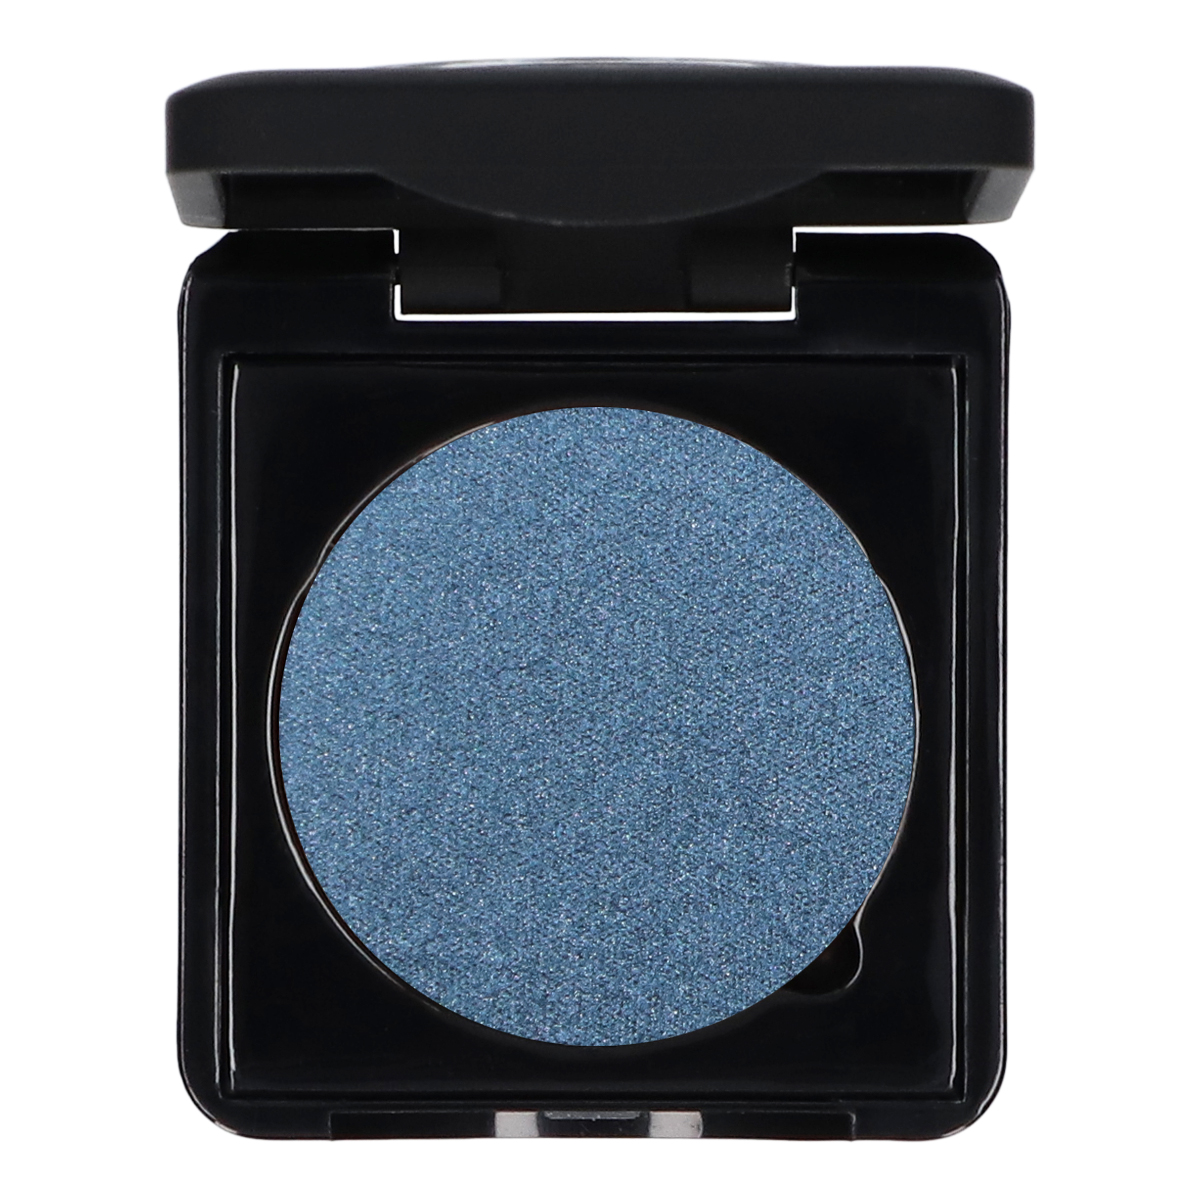 Make-up Studio Eyeshadow Super Frost - Late Night Blue